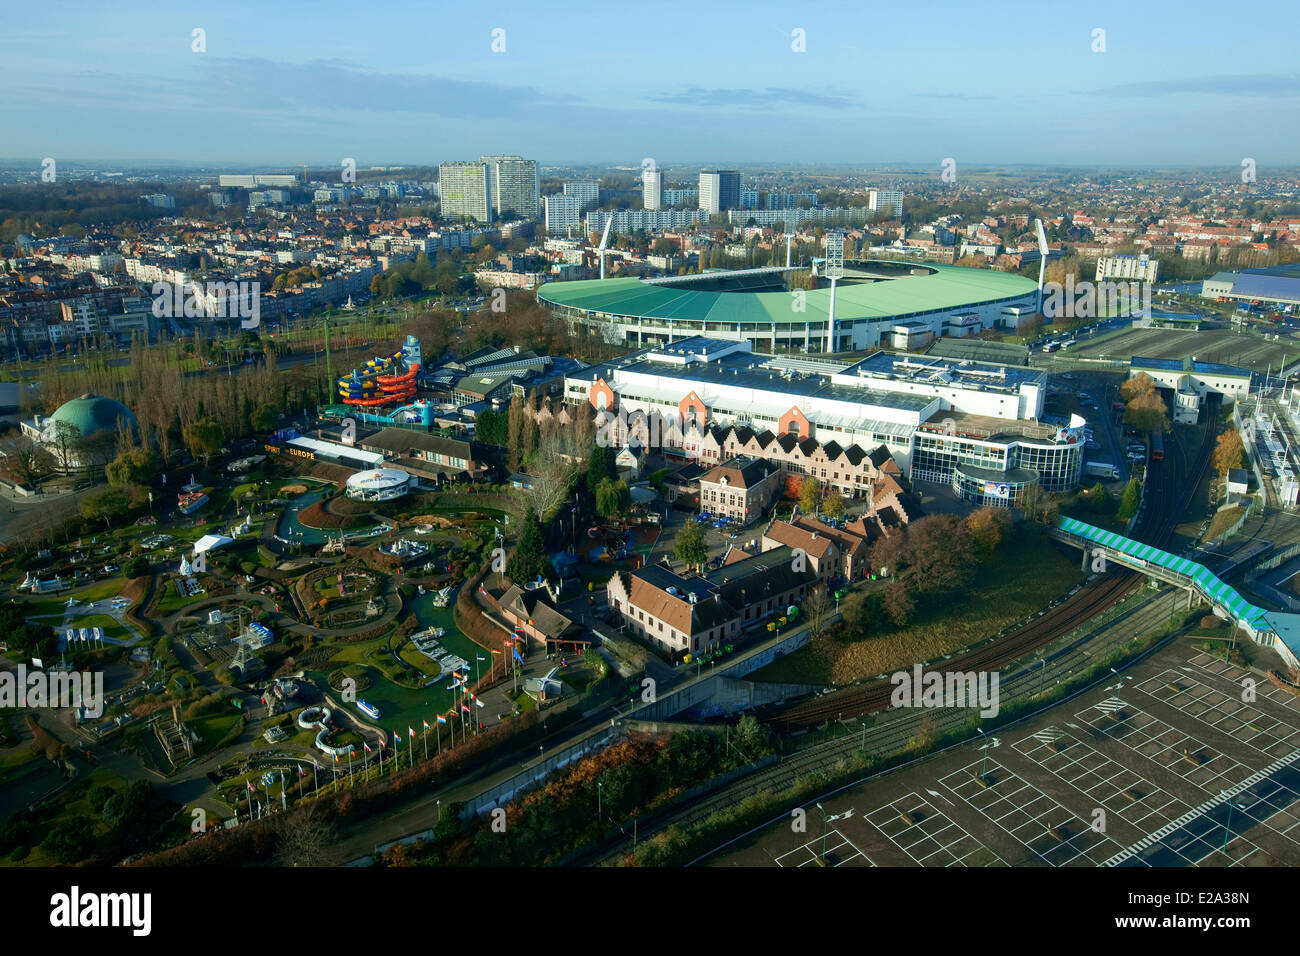 Belgium, Brussels, Heysel district, amusement park of Mini Europe and the King Baudouin stadium Stock Photo